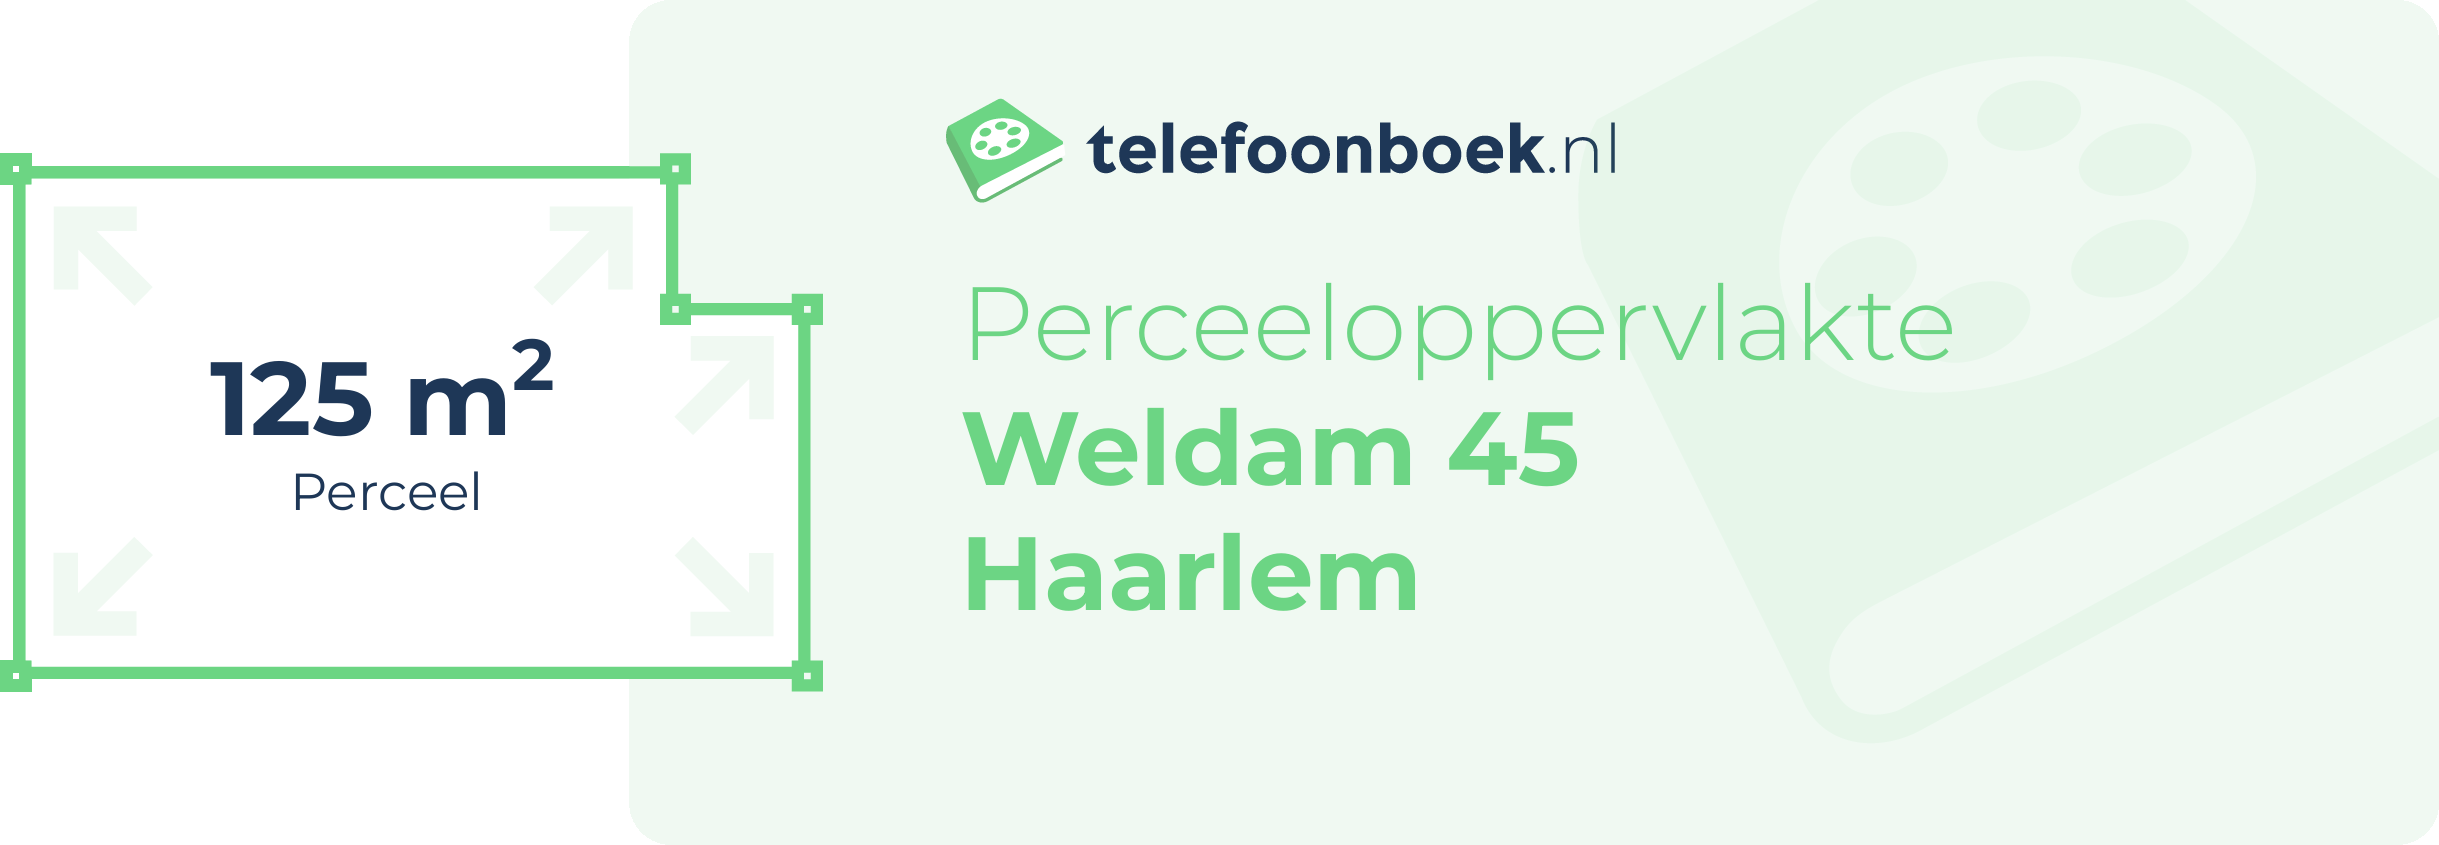 Perceeloppervlakte Weldam 45 Haarlem